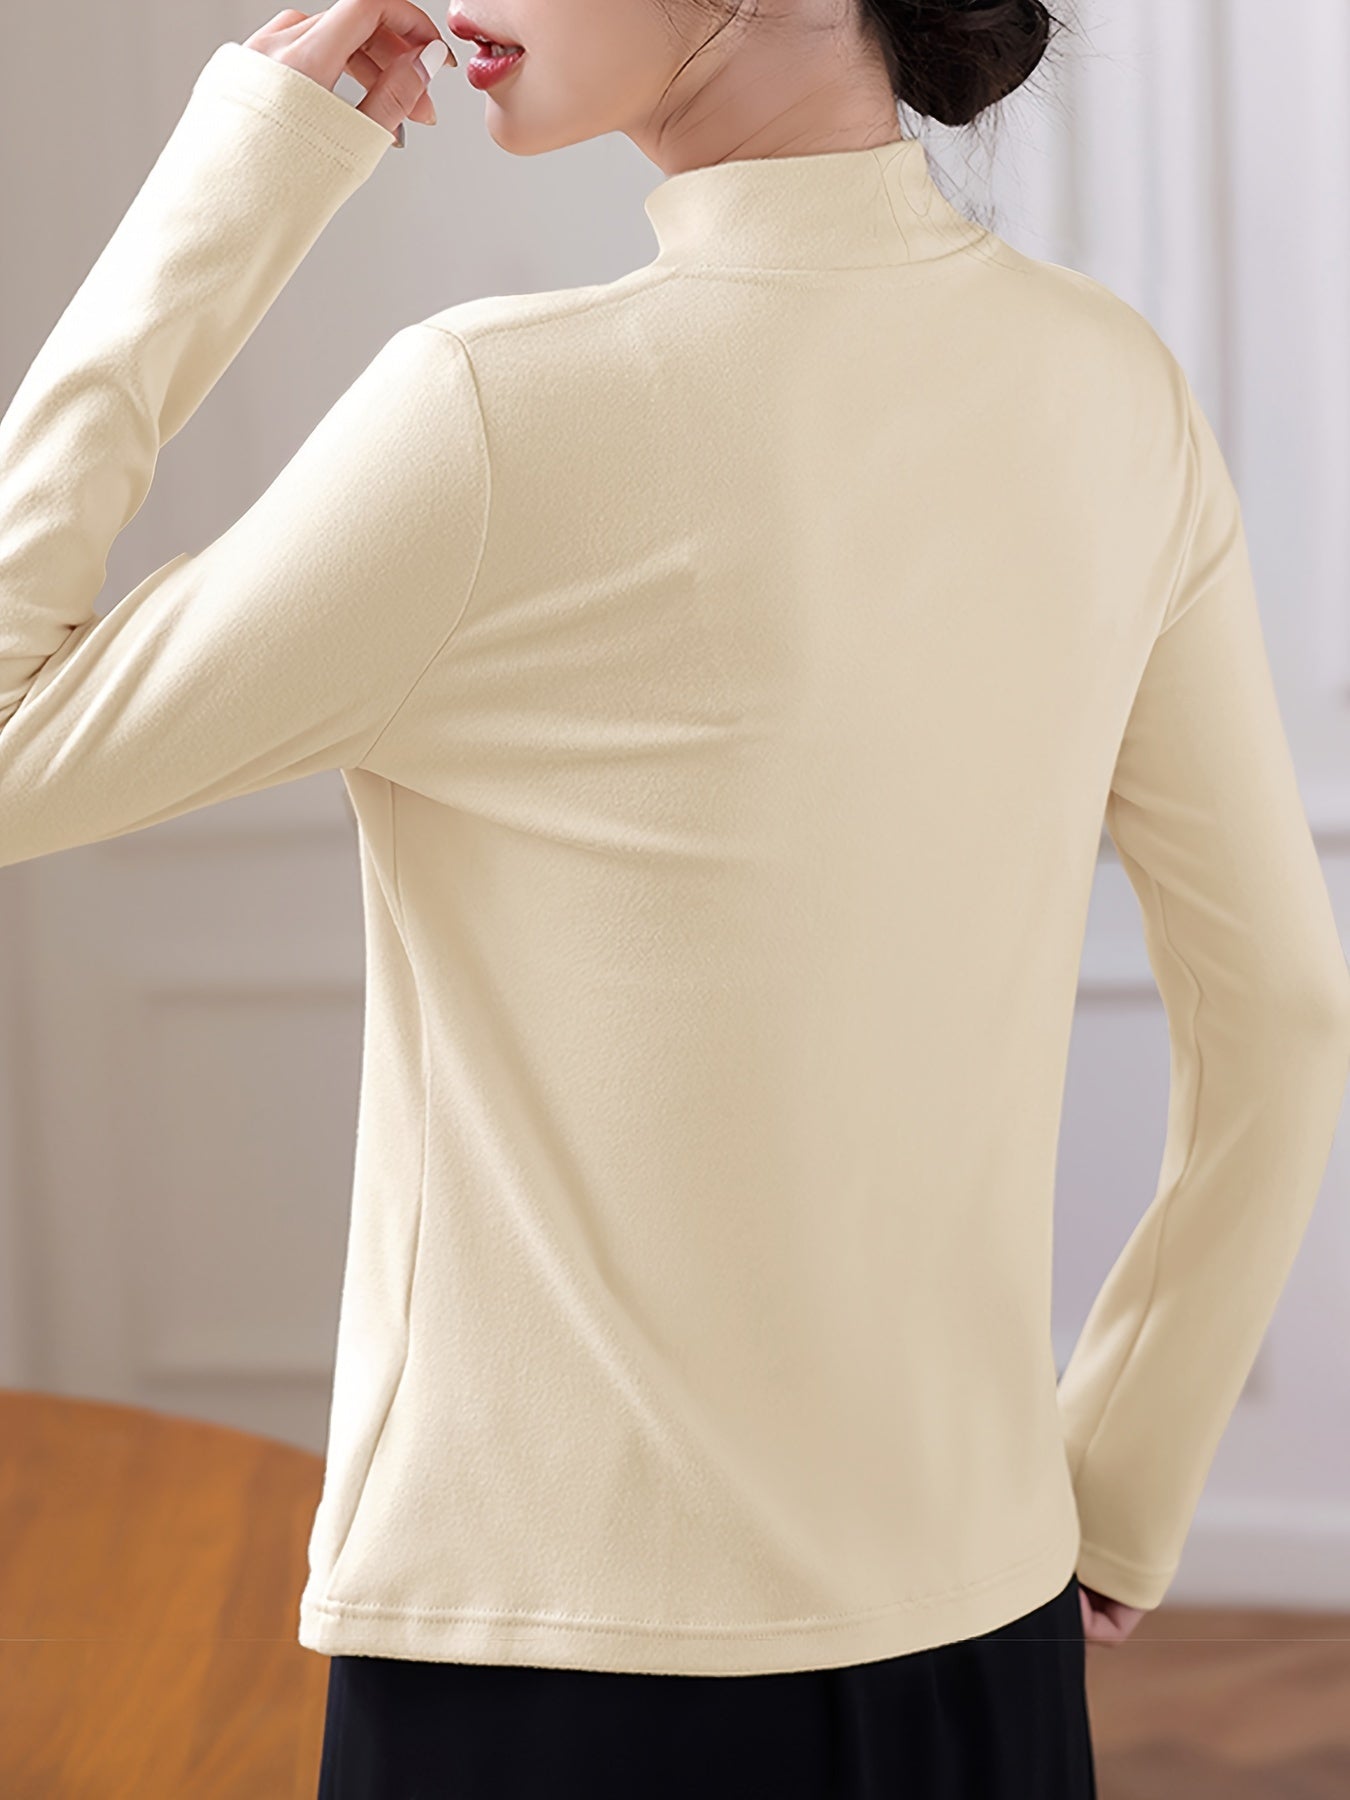 Antmvs Mock Neck Thermal Underwear Top, Soft & Comfortable Long Sleeve Top, Women's Lingerie & Sleepwear